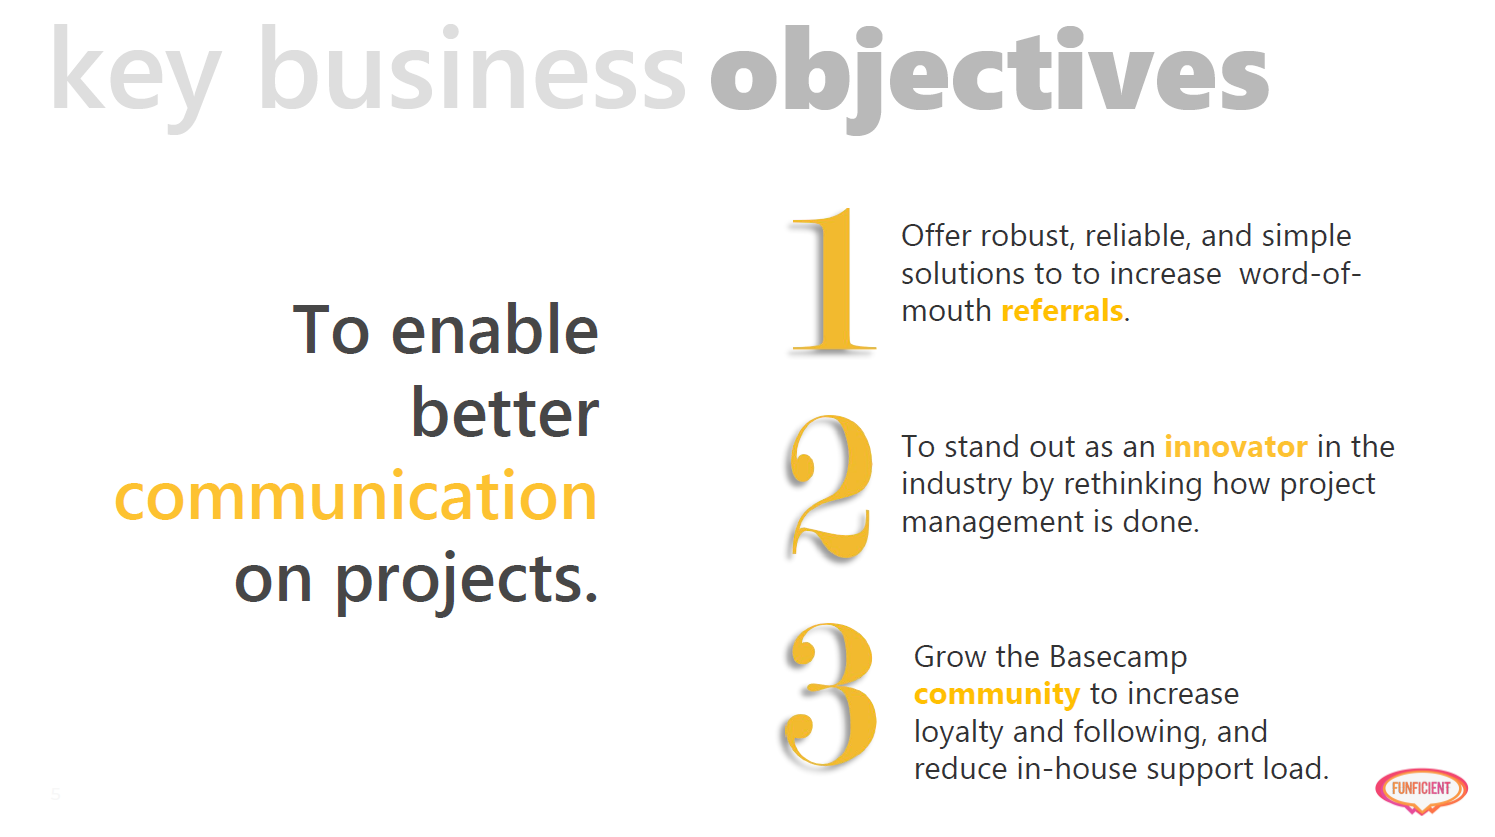 Key business objectives